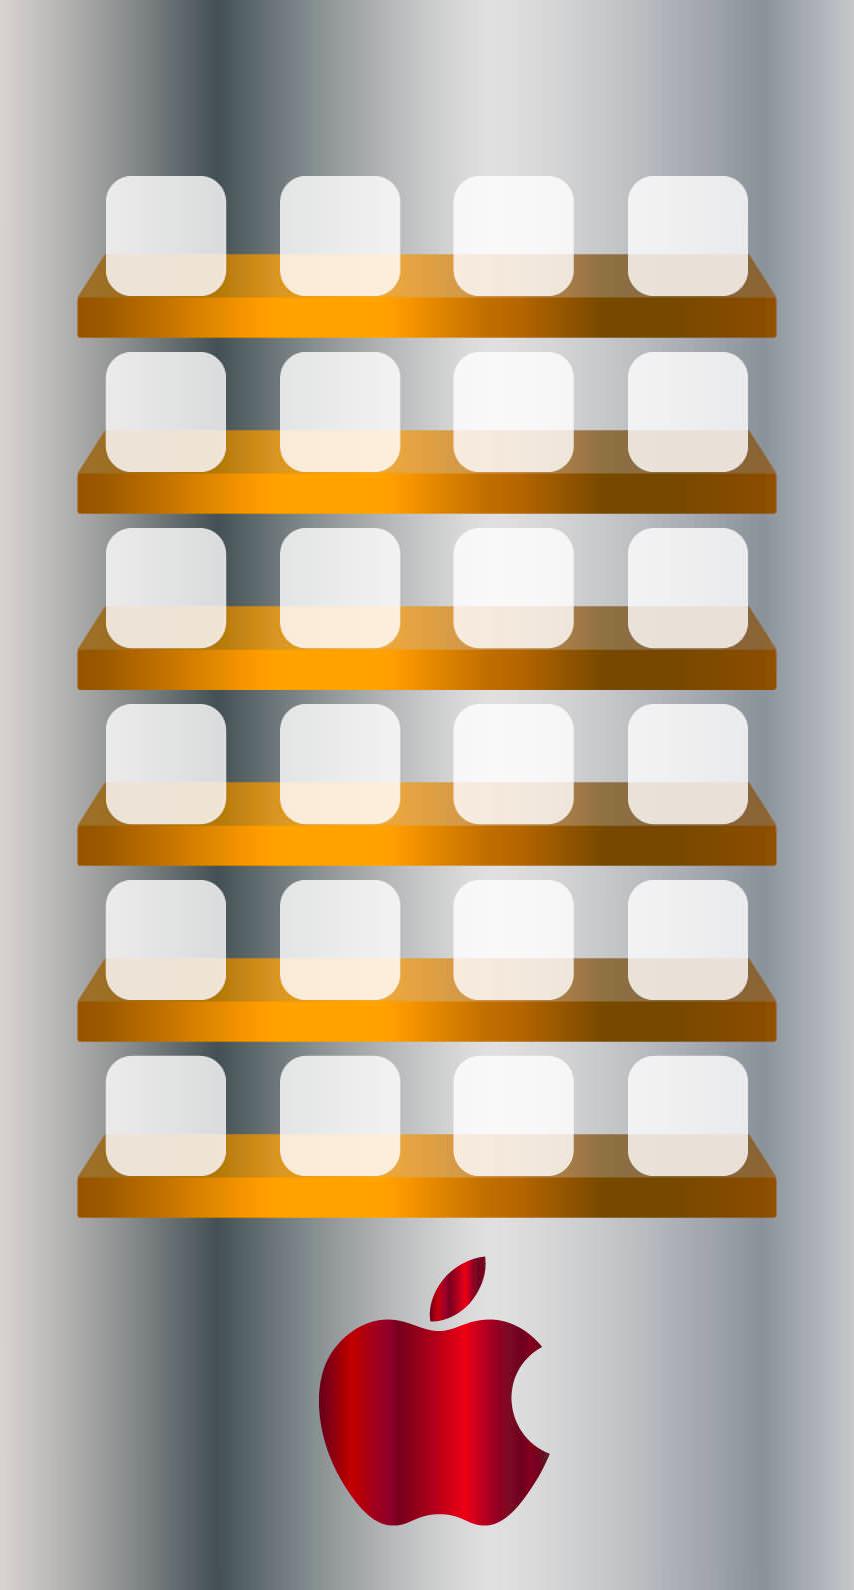 Appleロゴ棚クール Wallpaper Sc Iphone6s壁紙